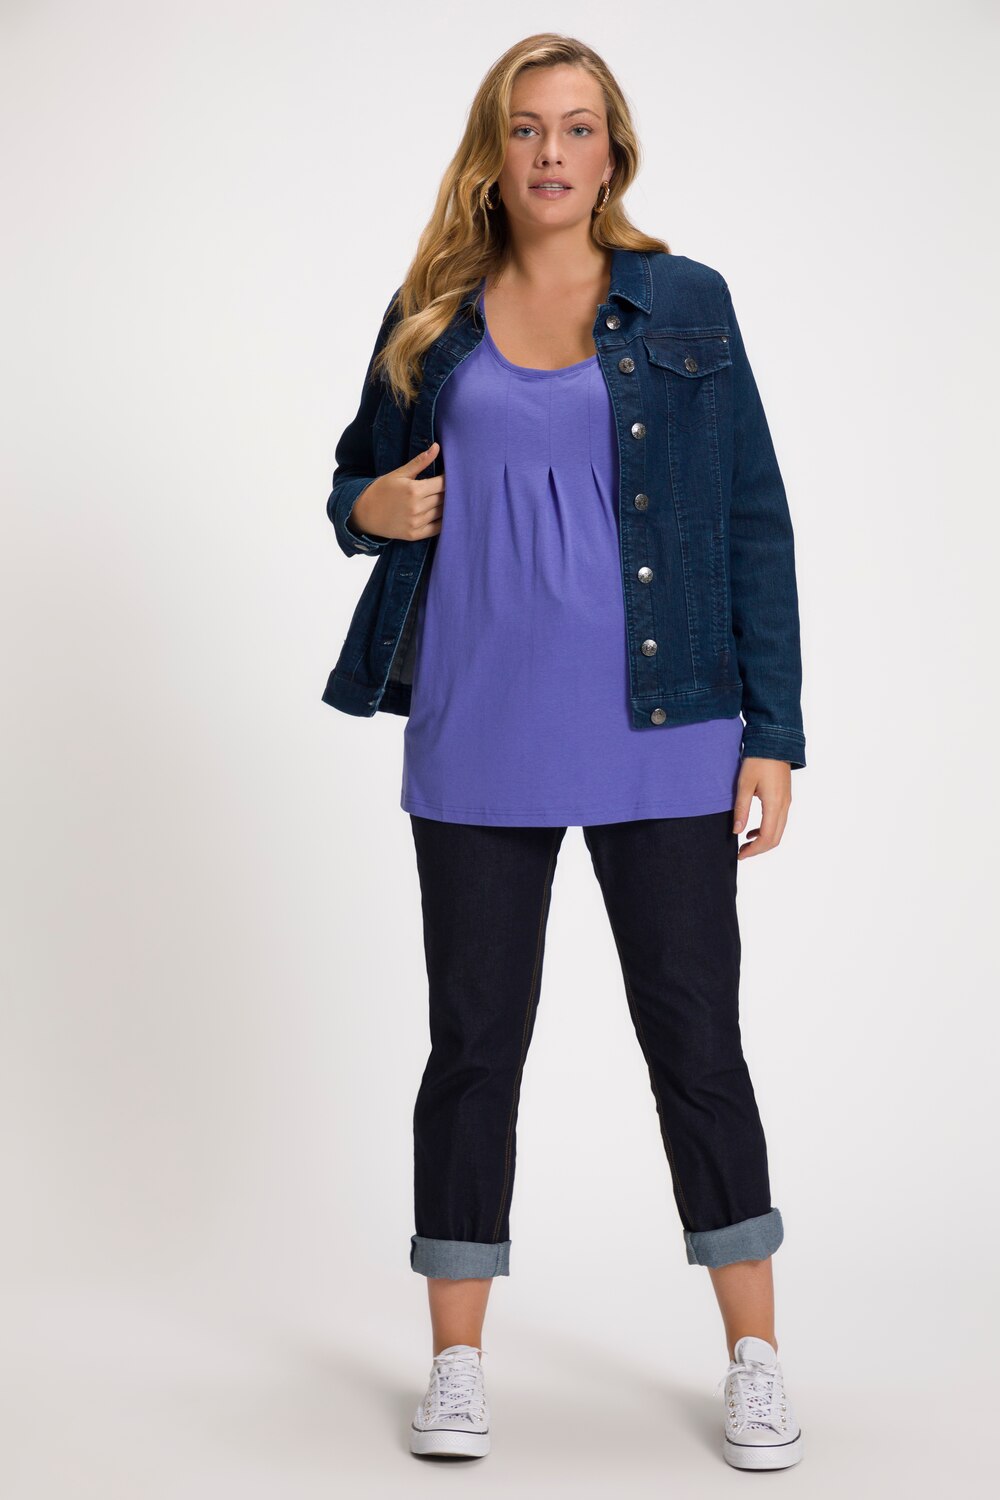 Plus Size Essential Pleat Front A-line Fit Knit Tank, Woman, purple, size: 16/18, synthetic fibers/cotton, Ulla Popken